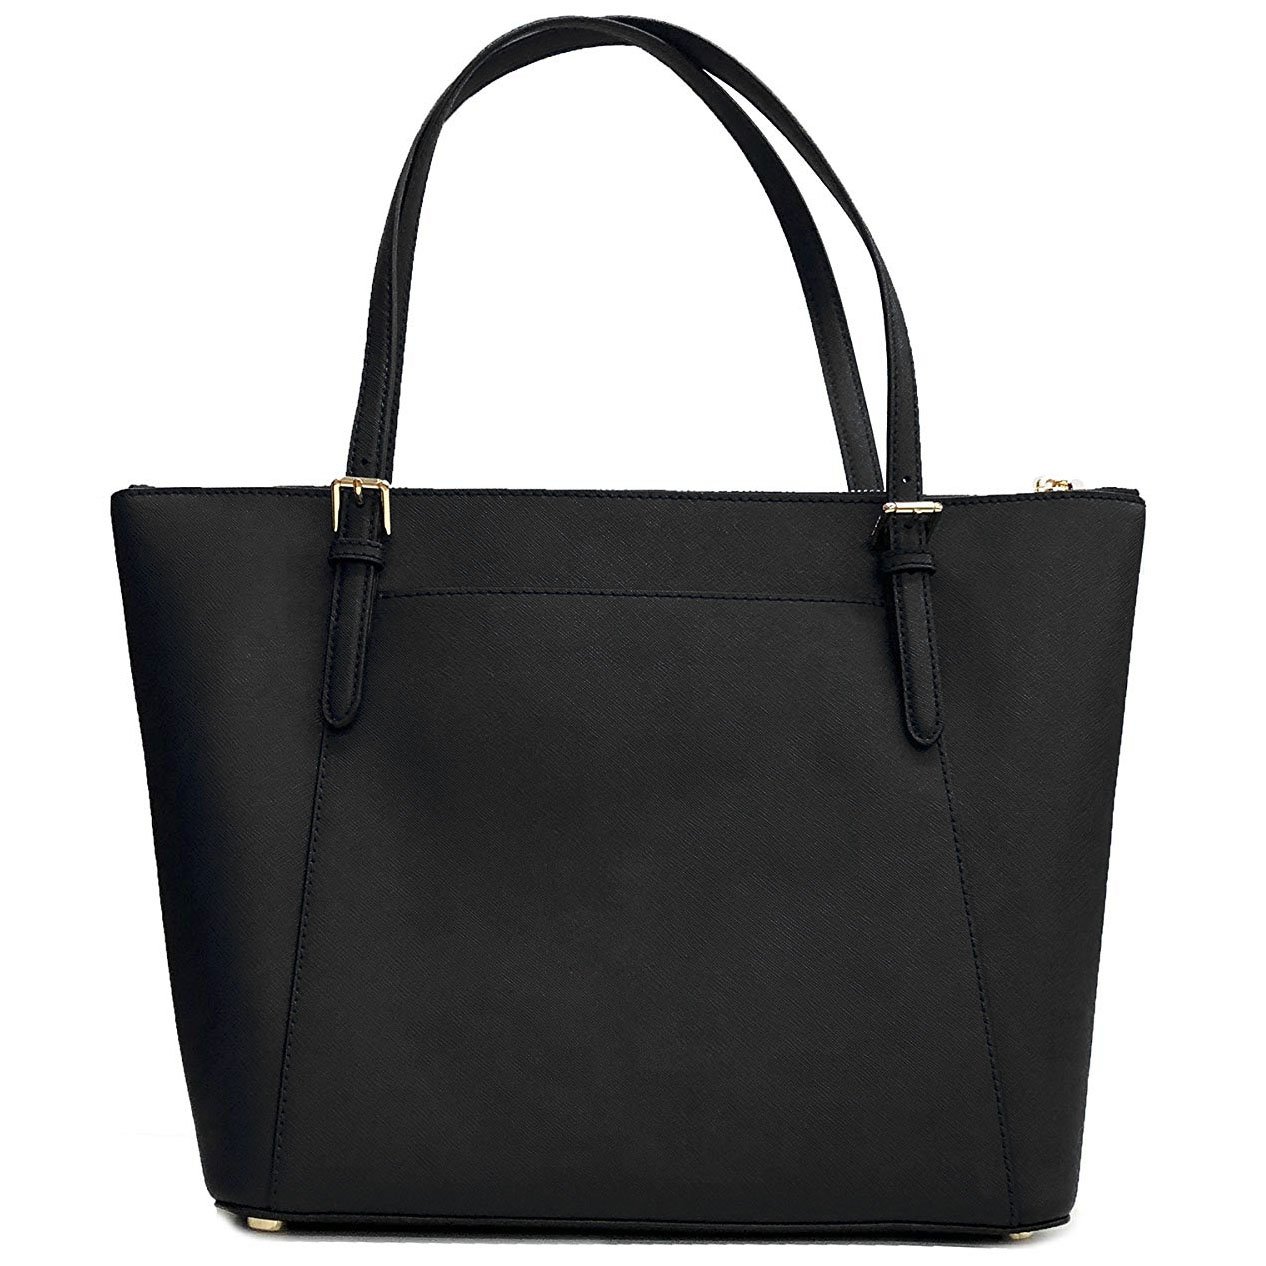 Michael Kors Handbags Afterpay Flash Sales, 57% OFF 